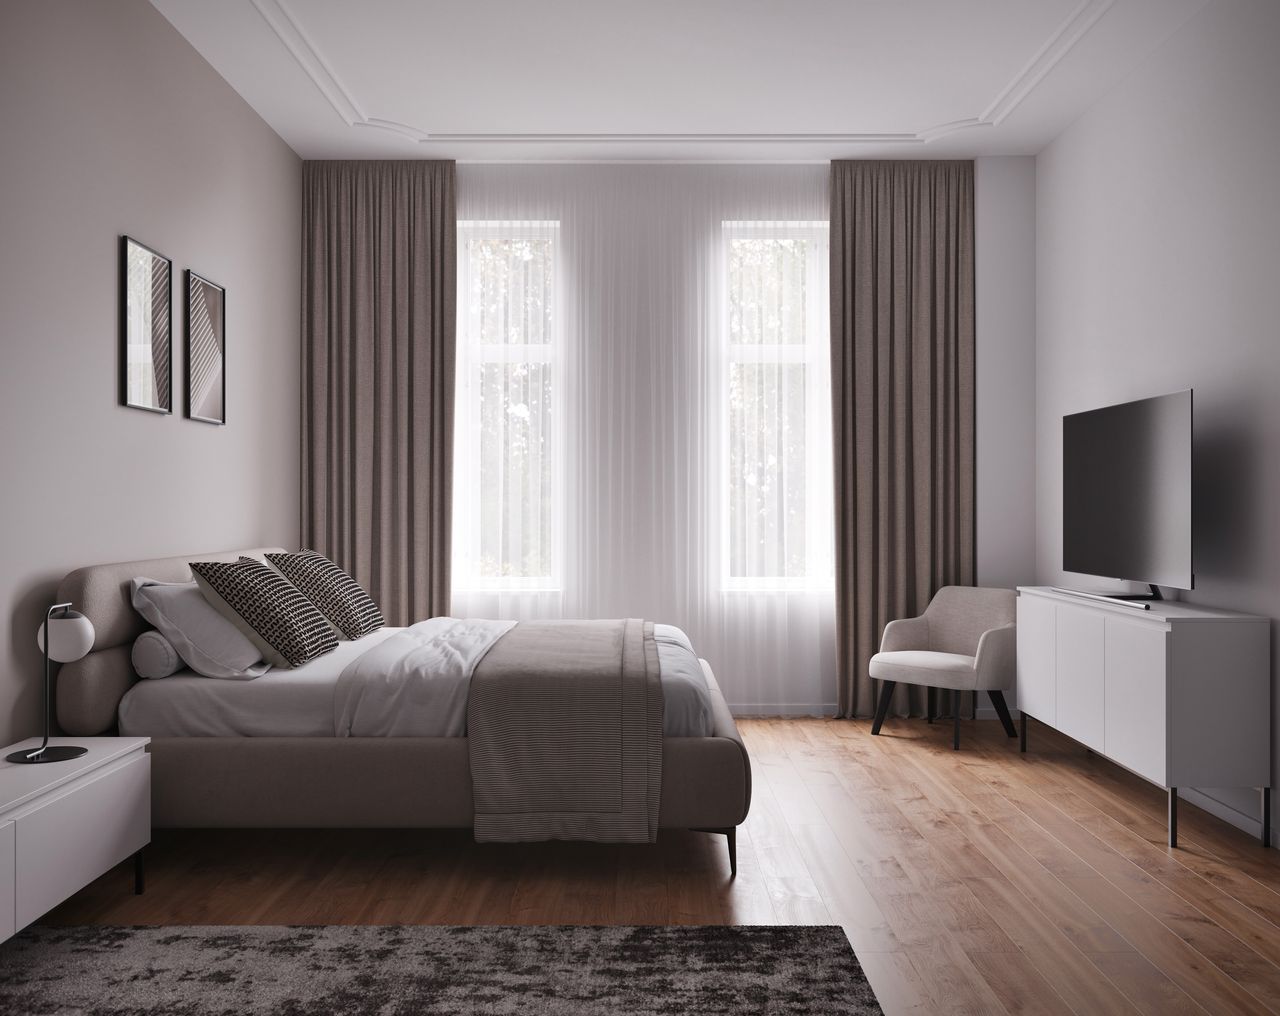 Premium renovated 1-bedroom apartment in Wedding district